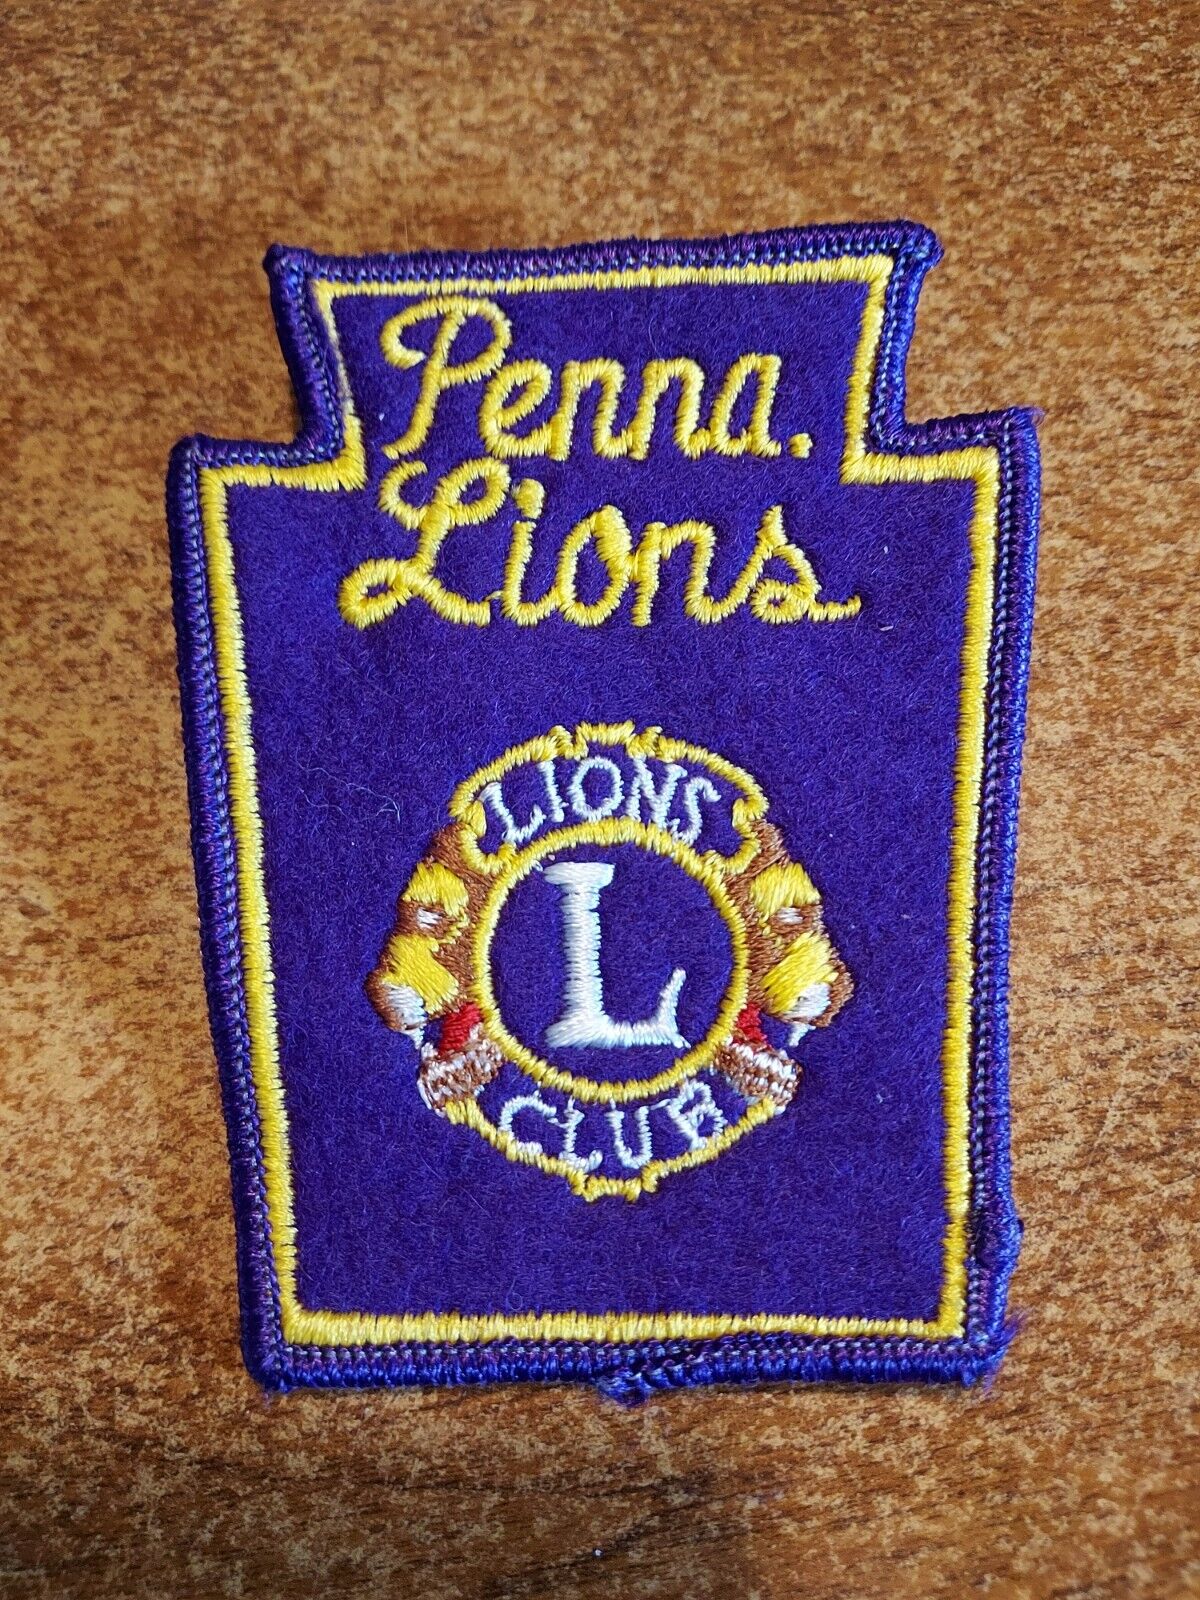 Vintage Penna. Lions Club embroidered patch - Keystone shape